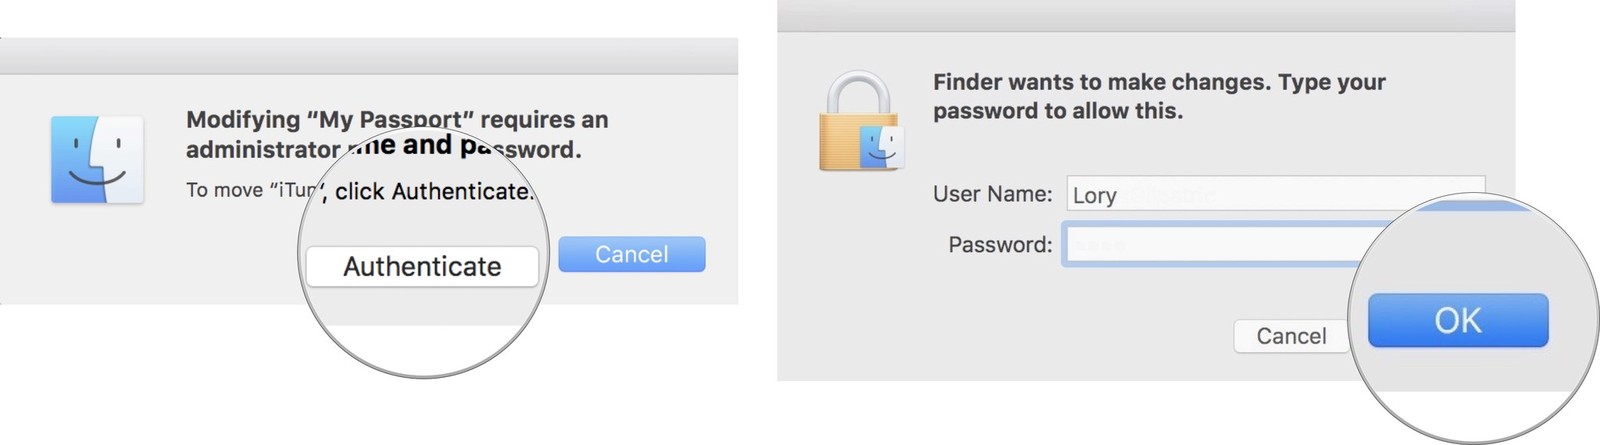 move itunes external hard drive password mac screenshot1